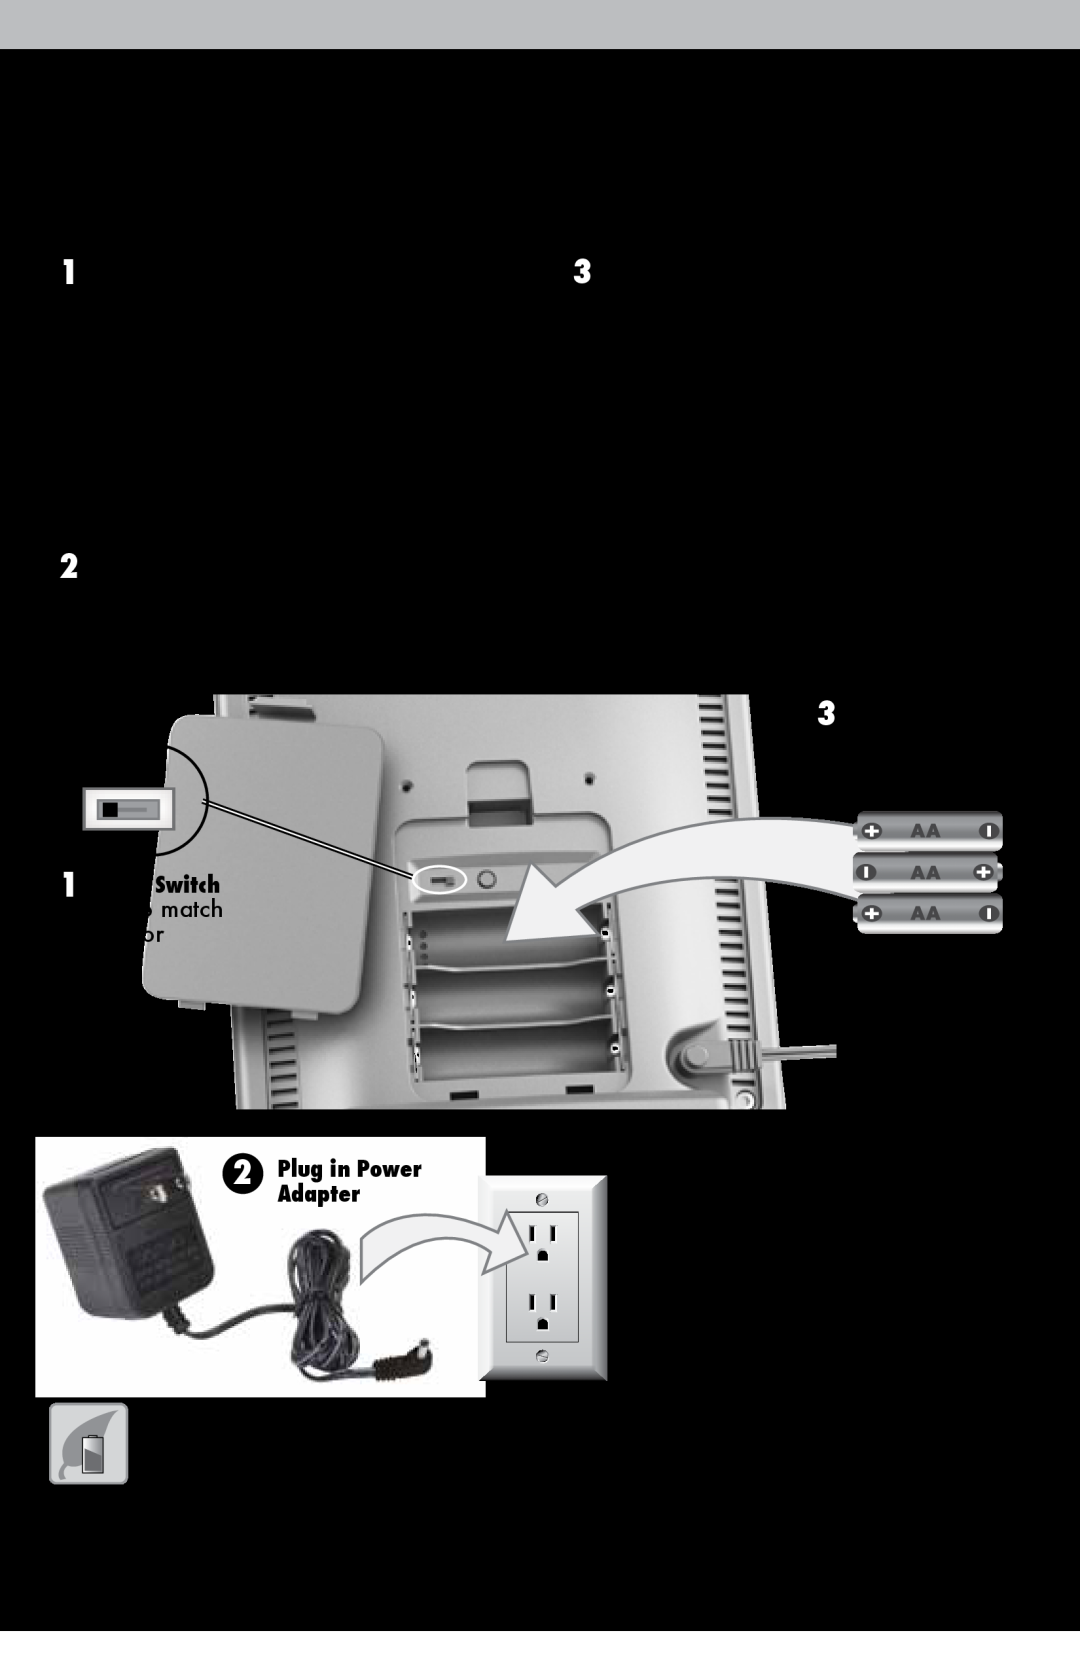 Acu-Rite 06017RM instruction manual Display Unit Setup, Set the A-B-C Switch, Plug-in Power Adapter, A B C 